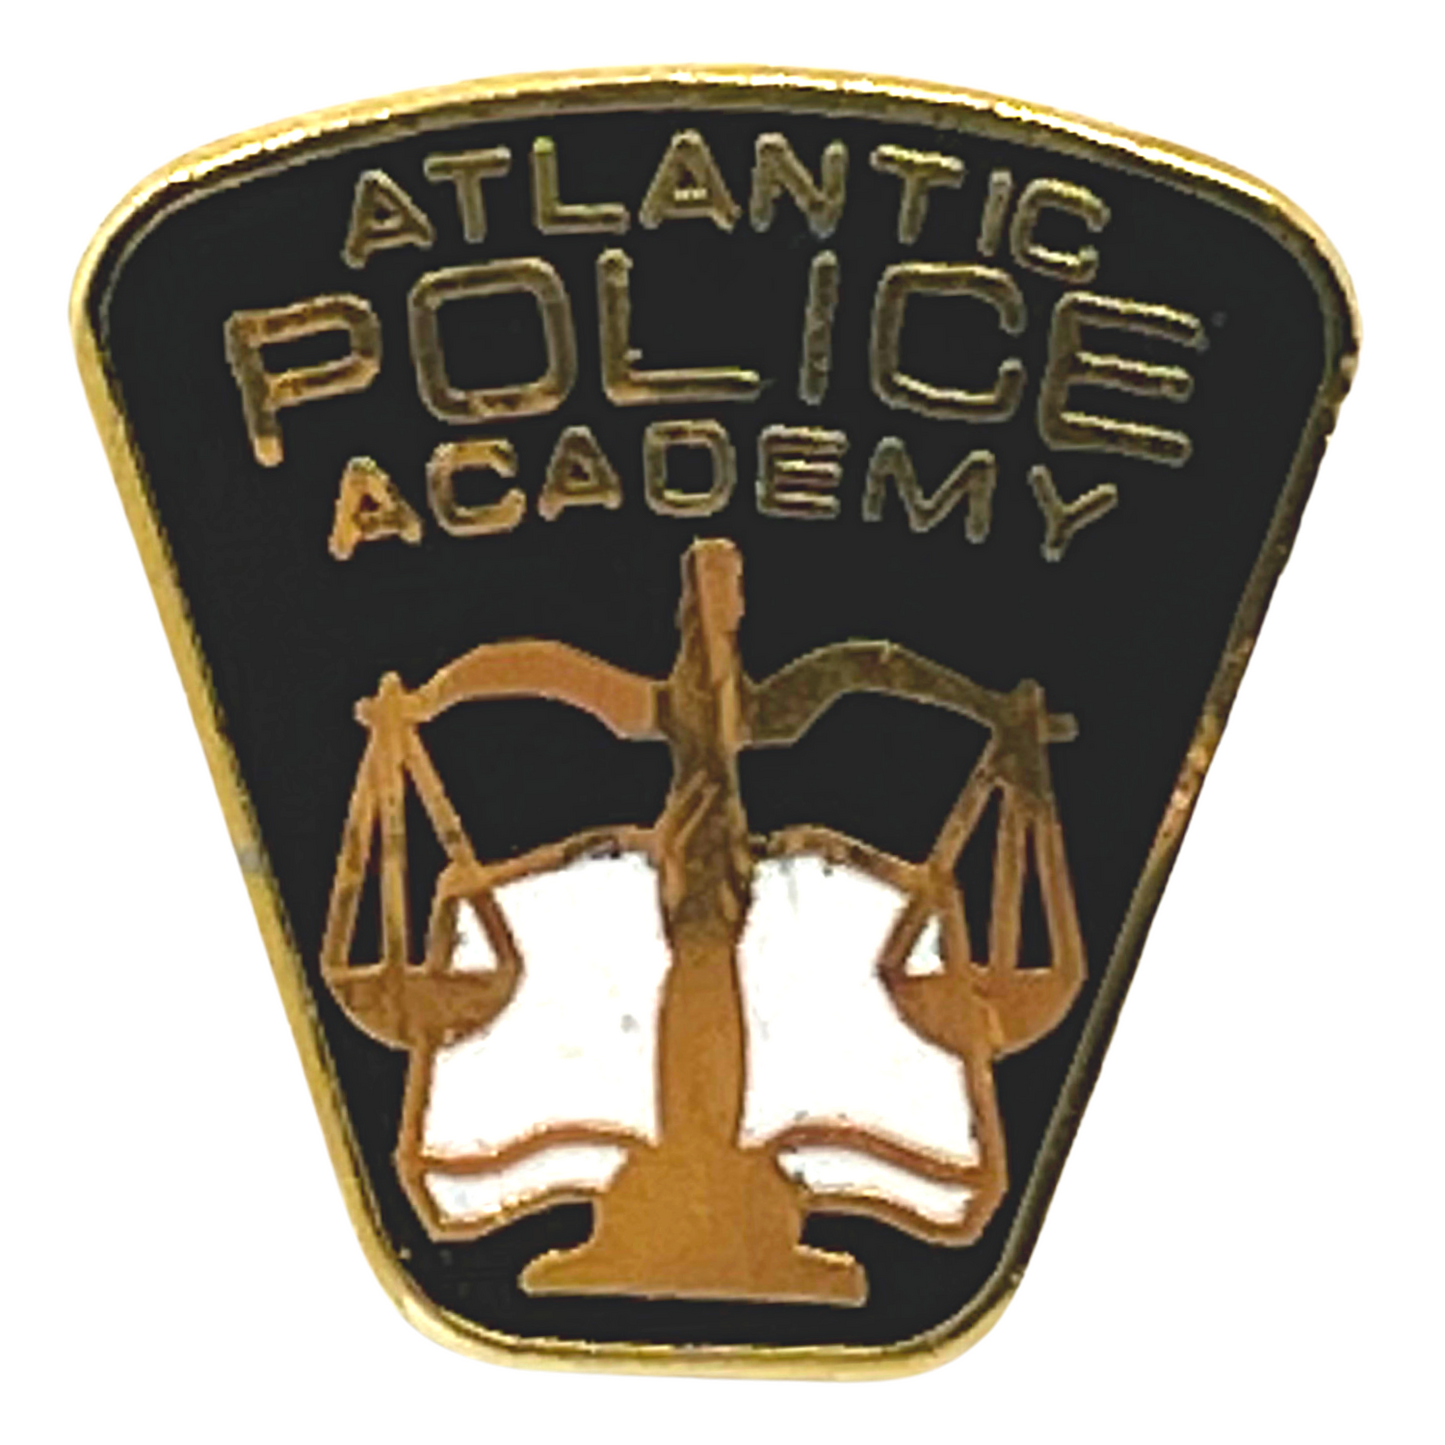 Atlantic Police Academy Emergency Services Lapel Pin